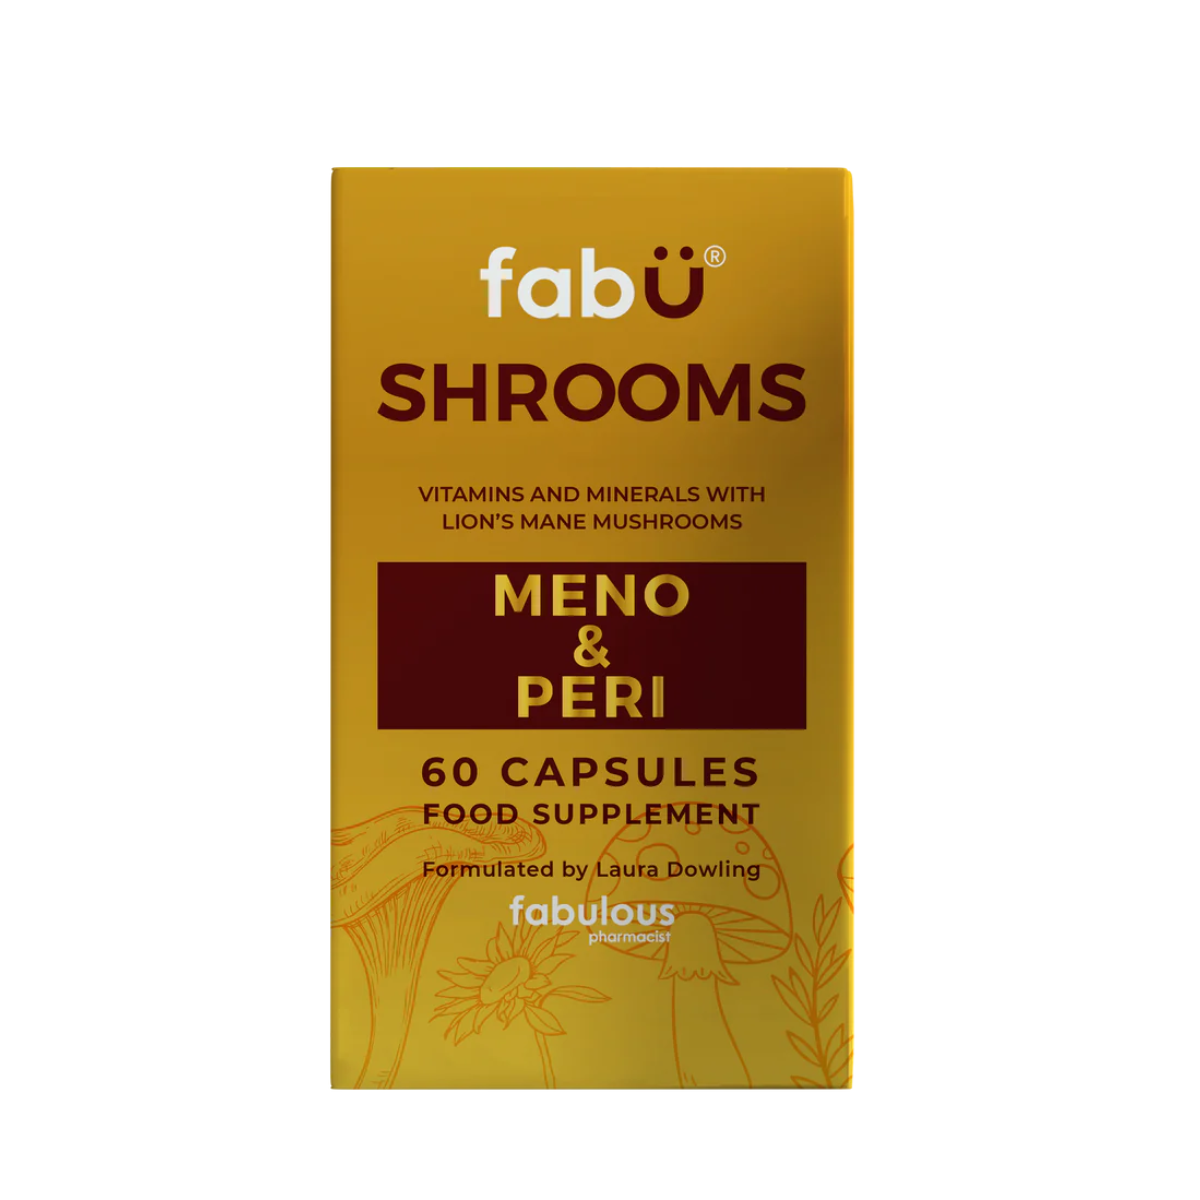 fabÜ Shrooms Meno & Peri packaging 